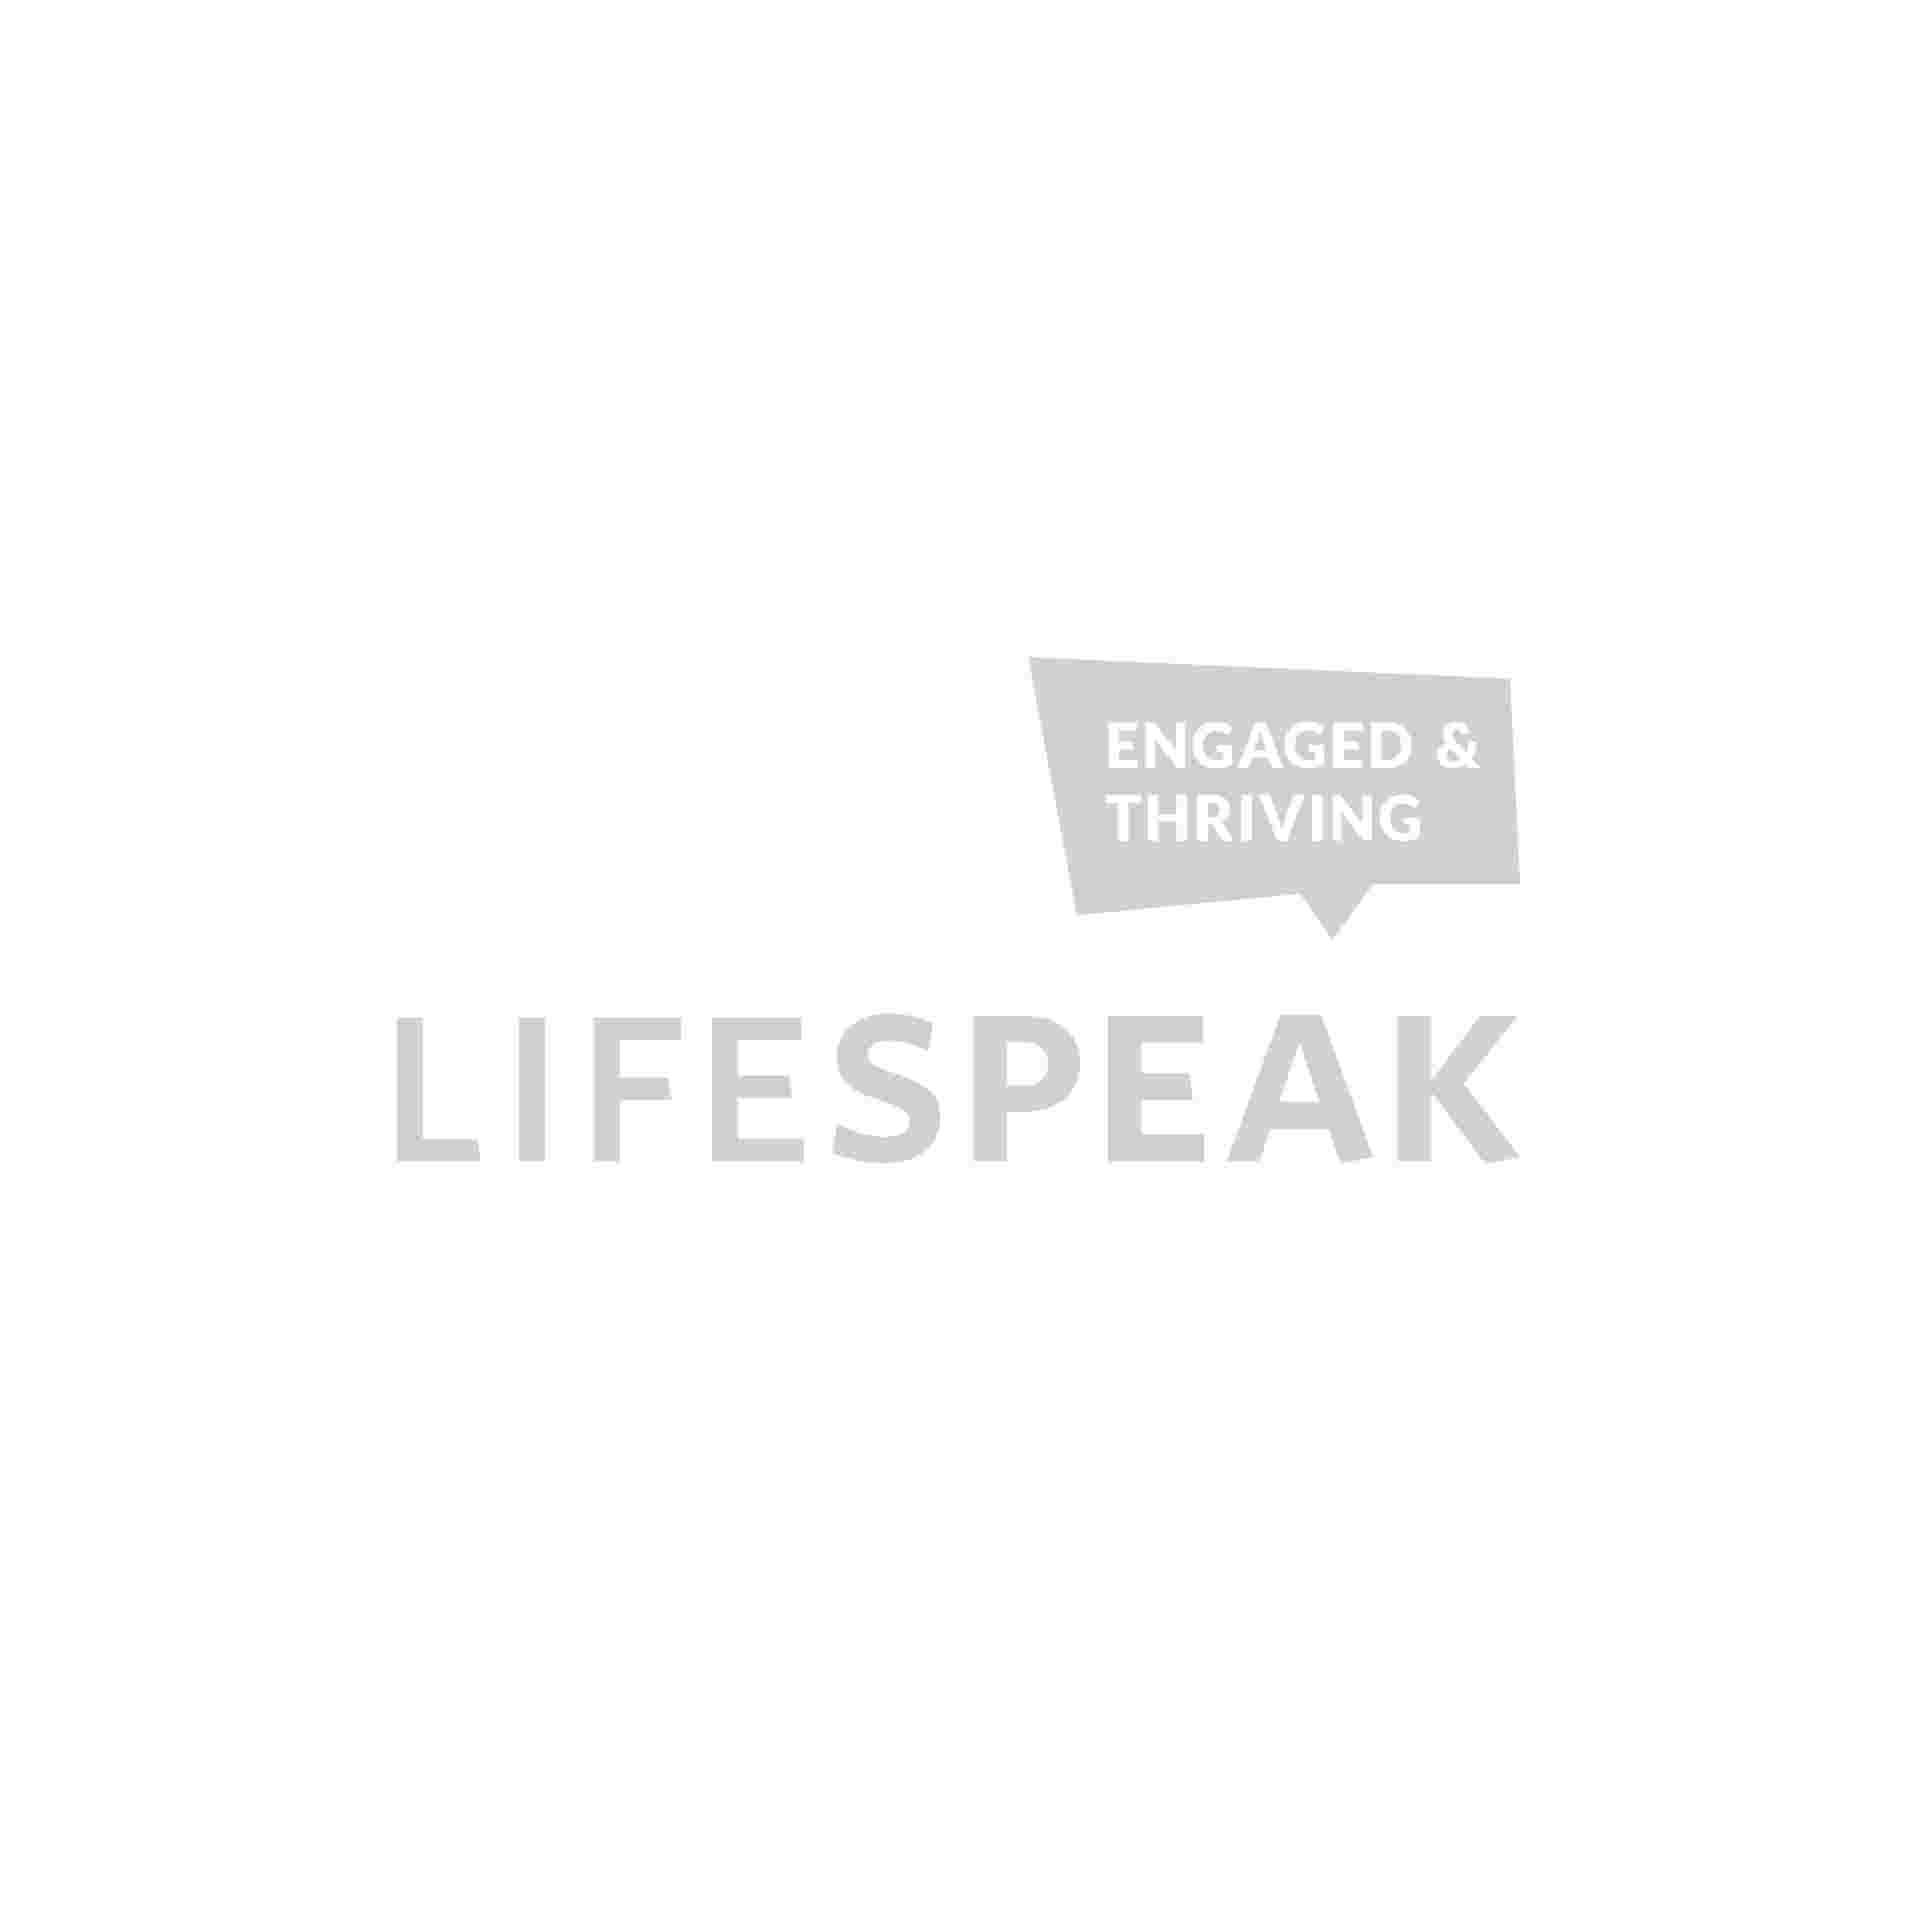 Lifespeak - feature_Lifespeak_logo2_2400px